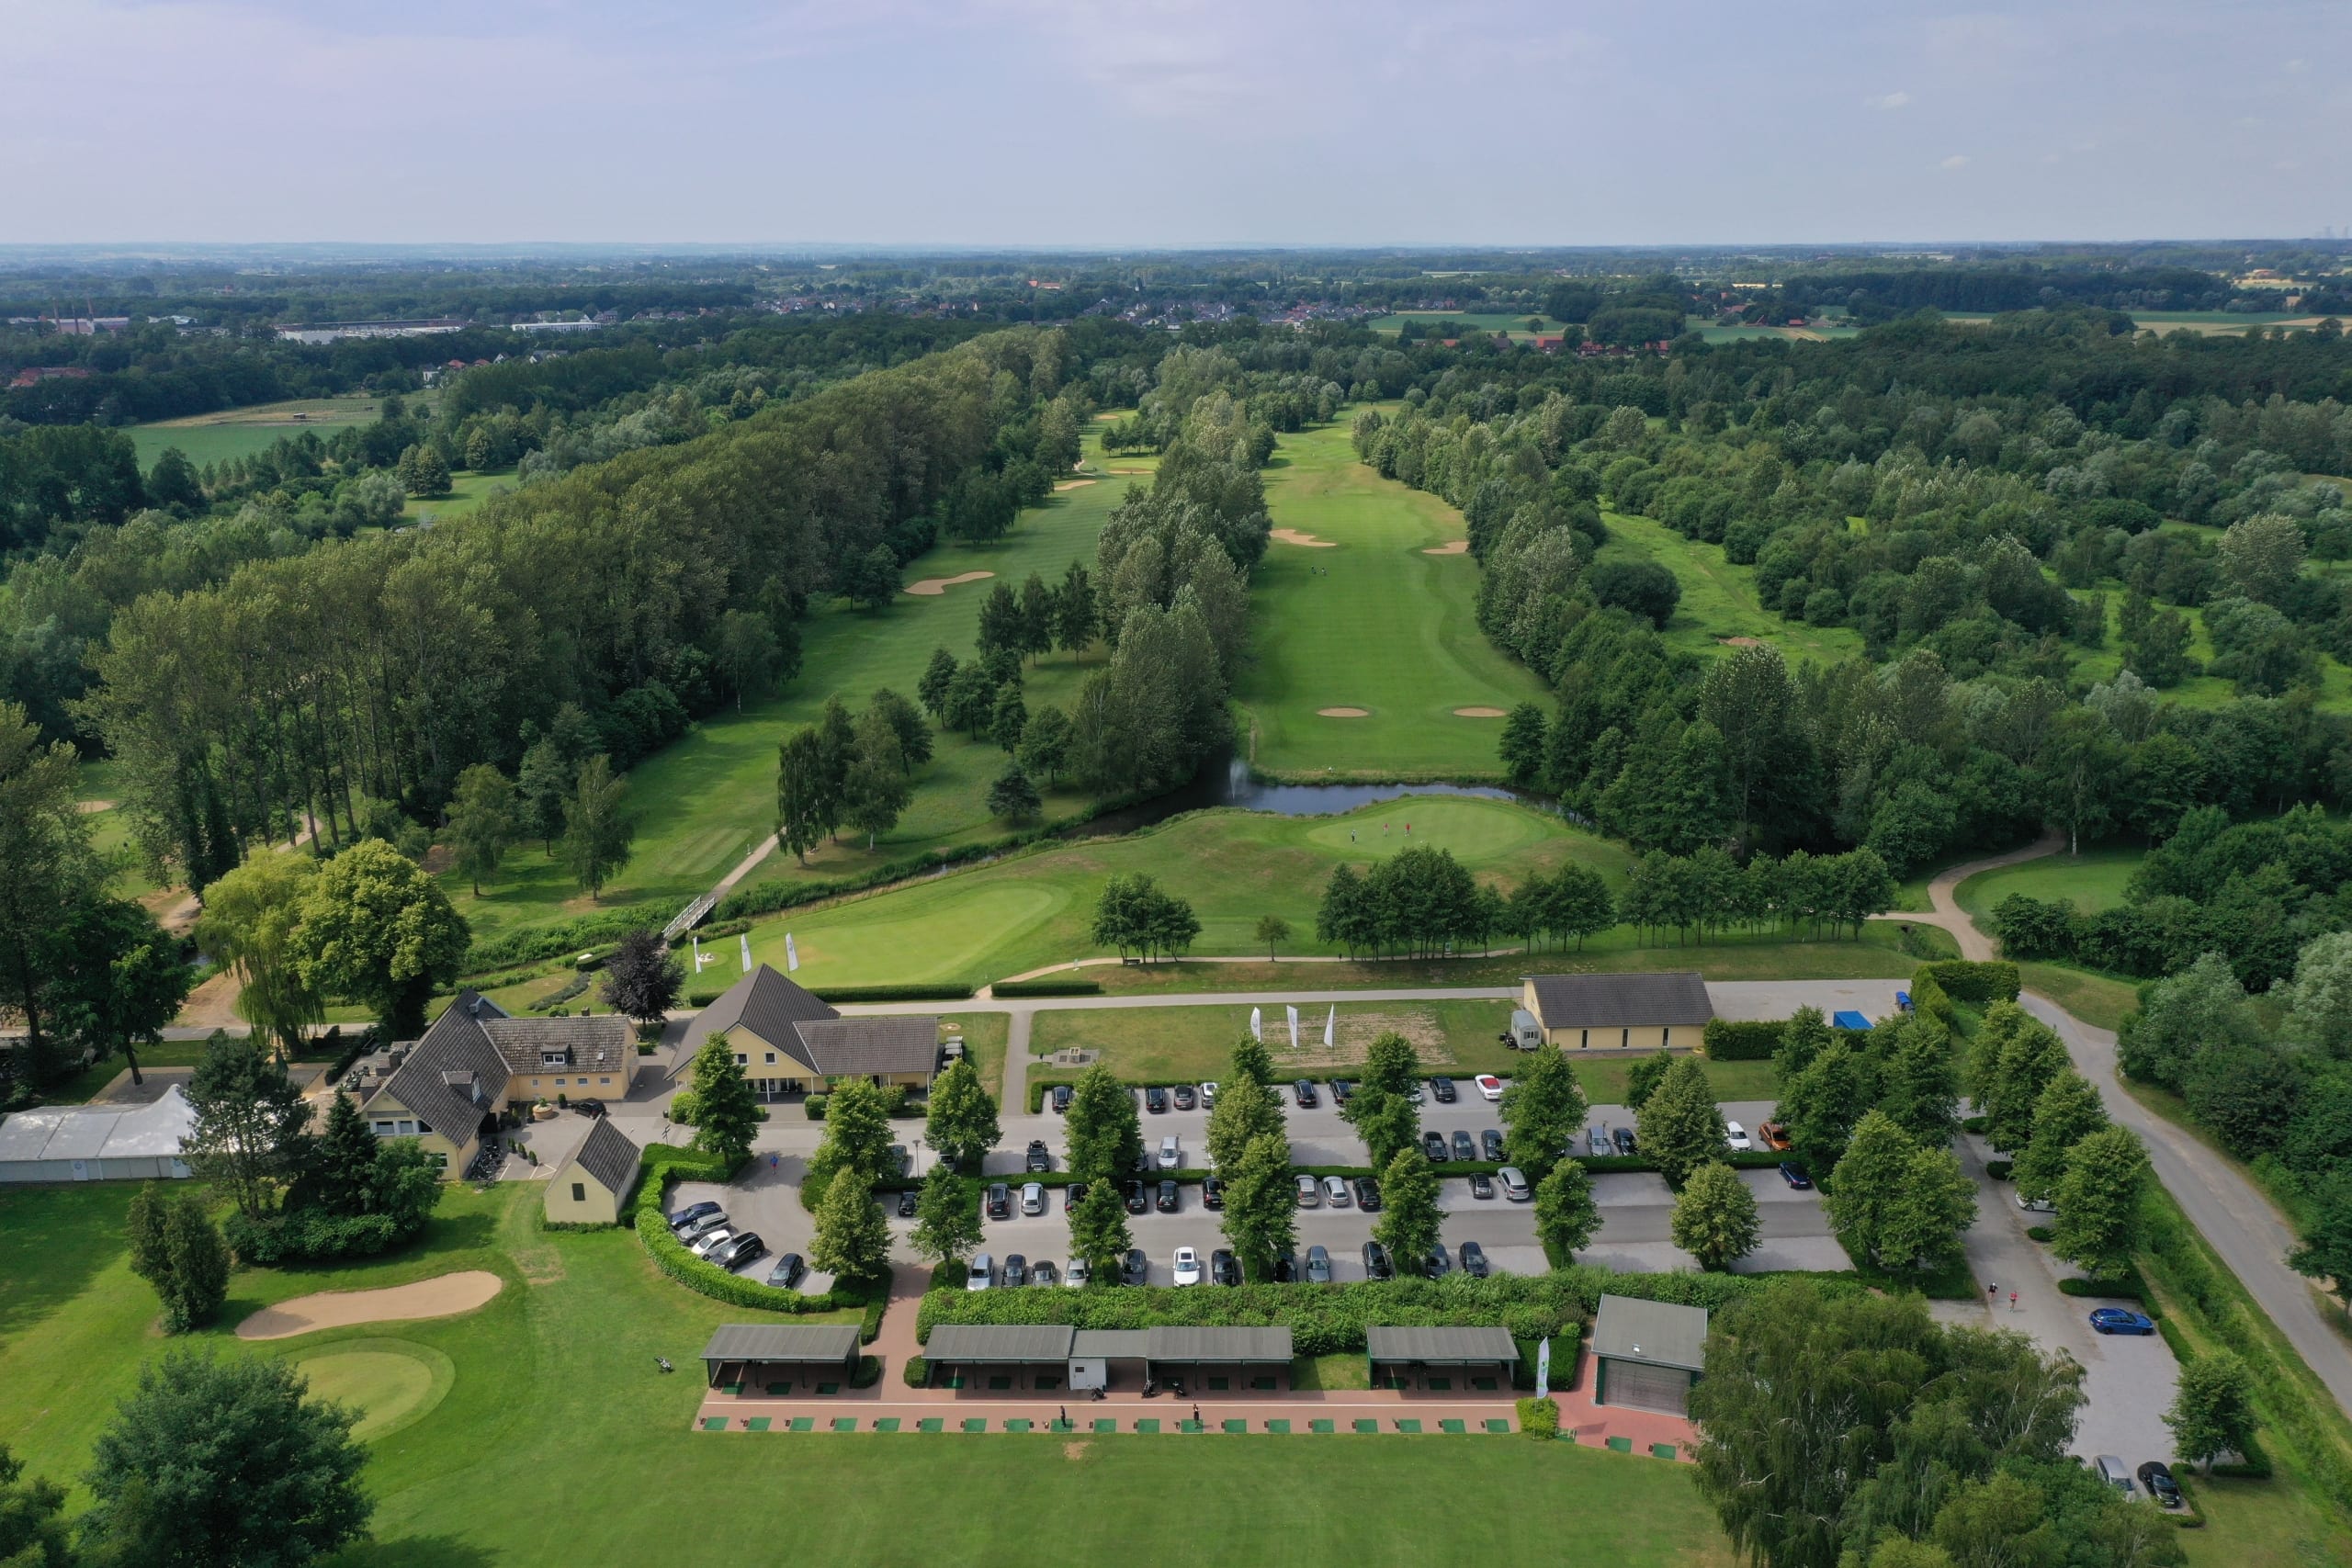 Faszination Golf Erleben Golfclub Lippstadt E V Greenfee